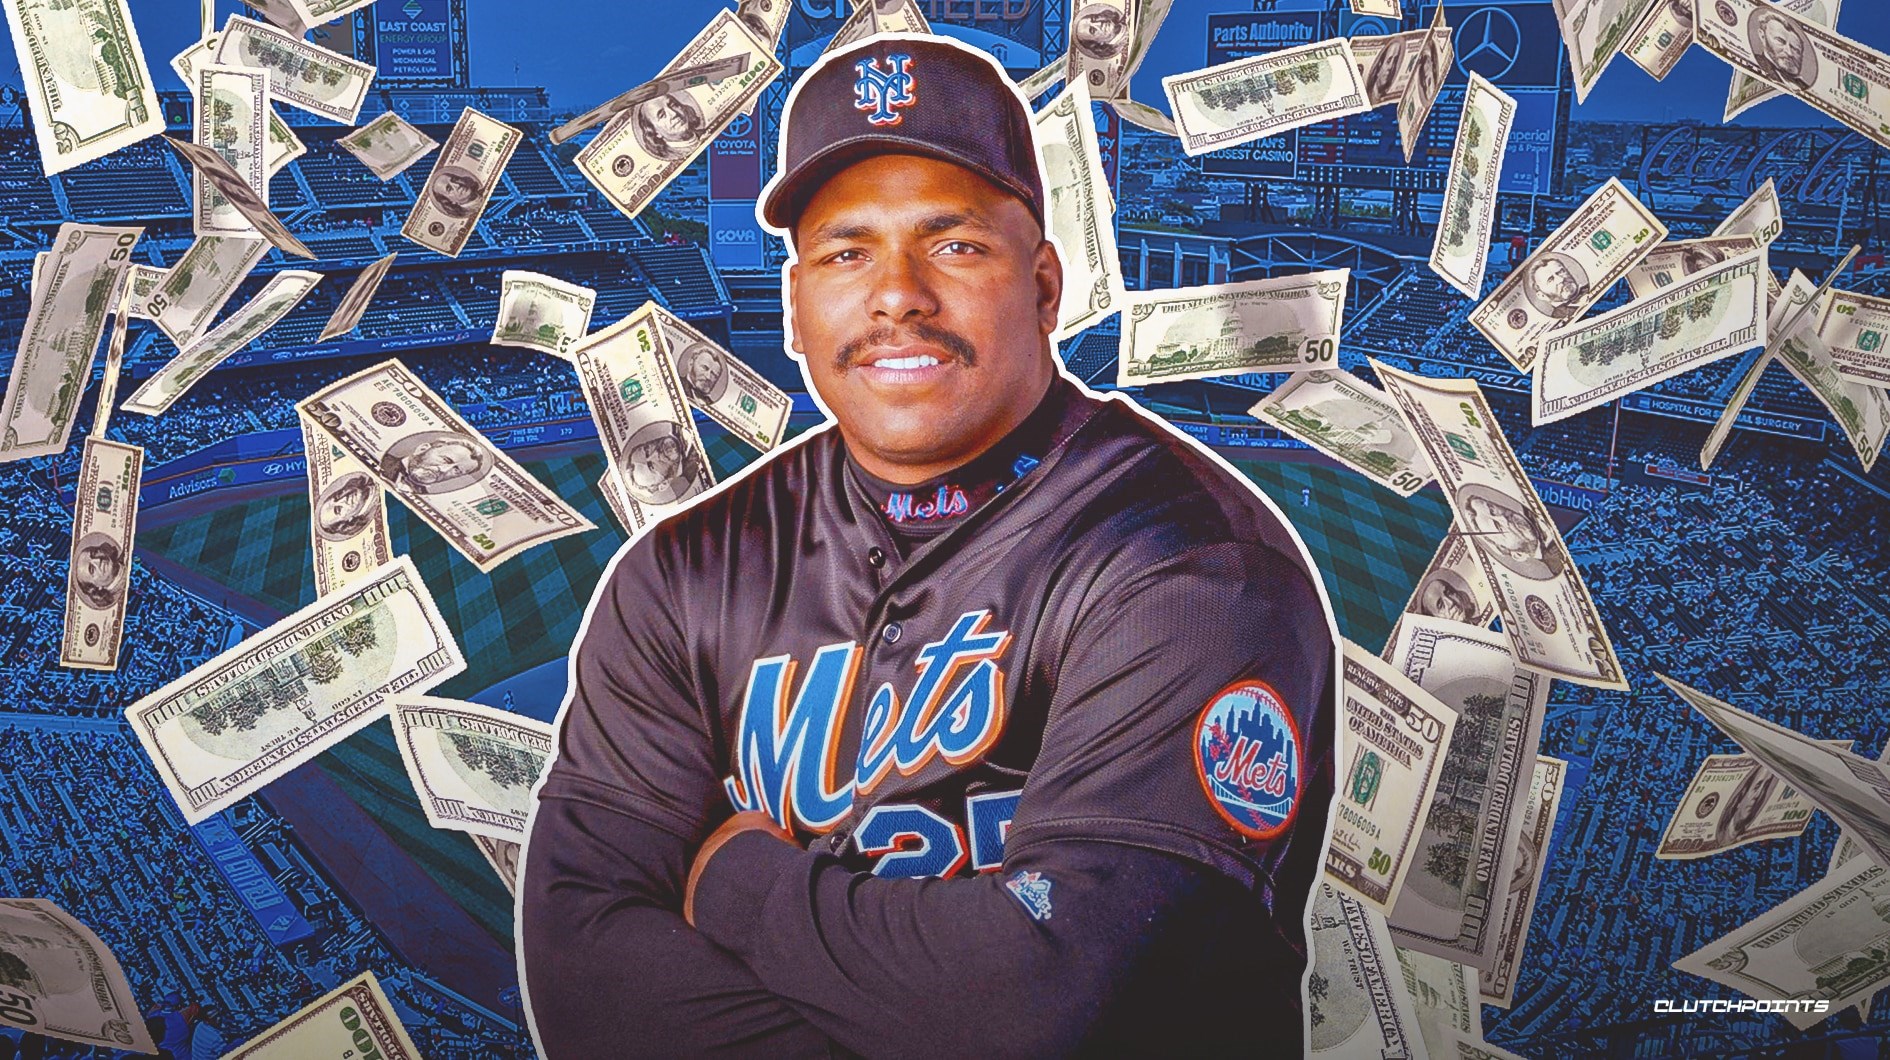 Mets has-been Bonilla gets $30M last laugh